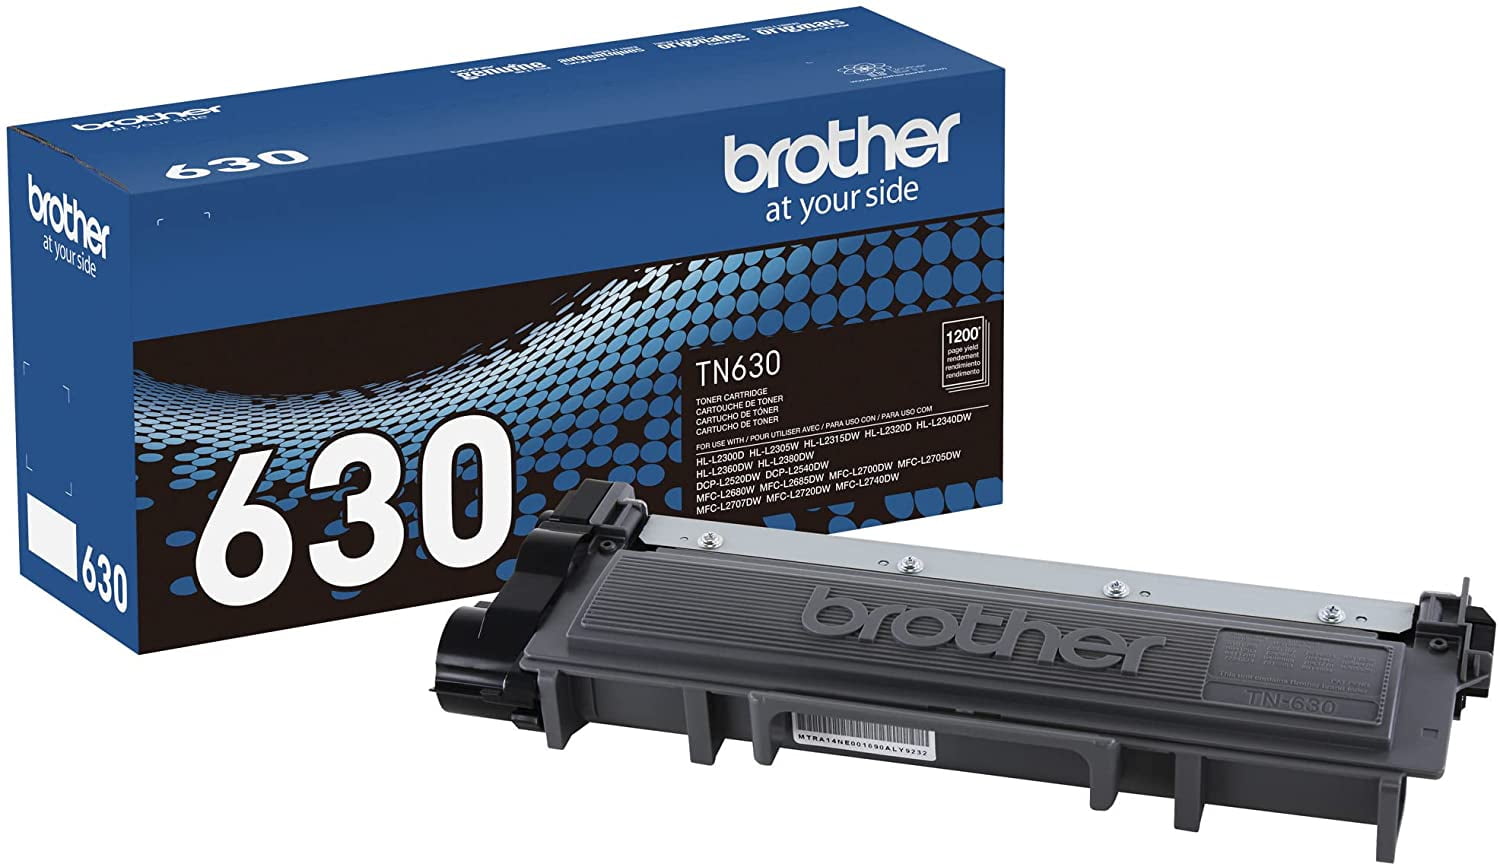 Brother DCP-L2520DW Toner Cartridges